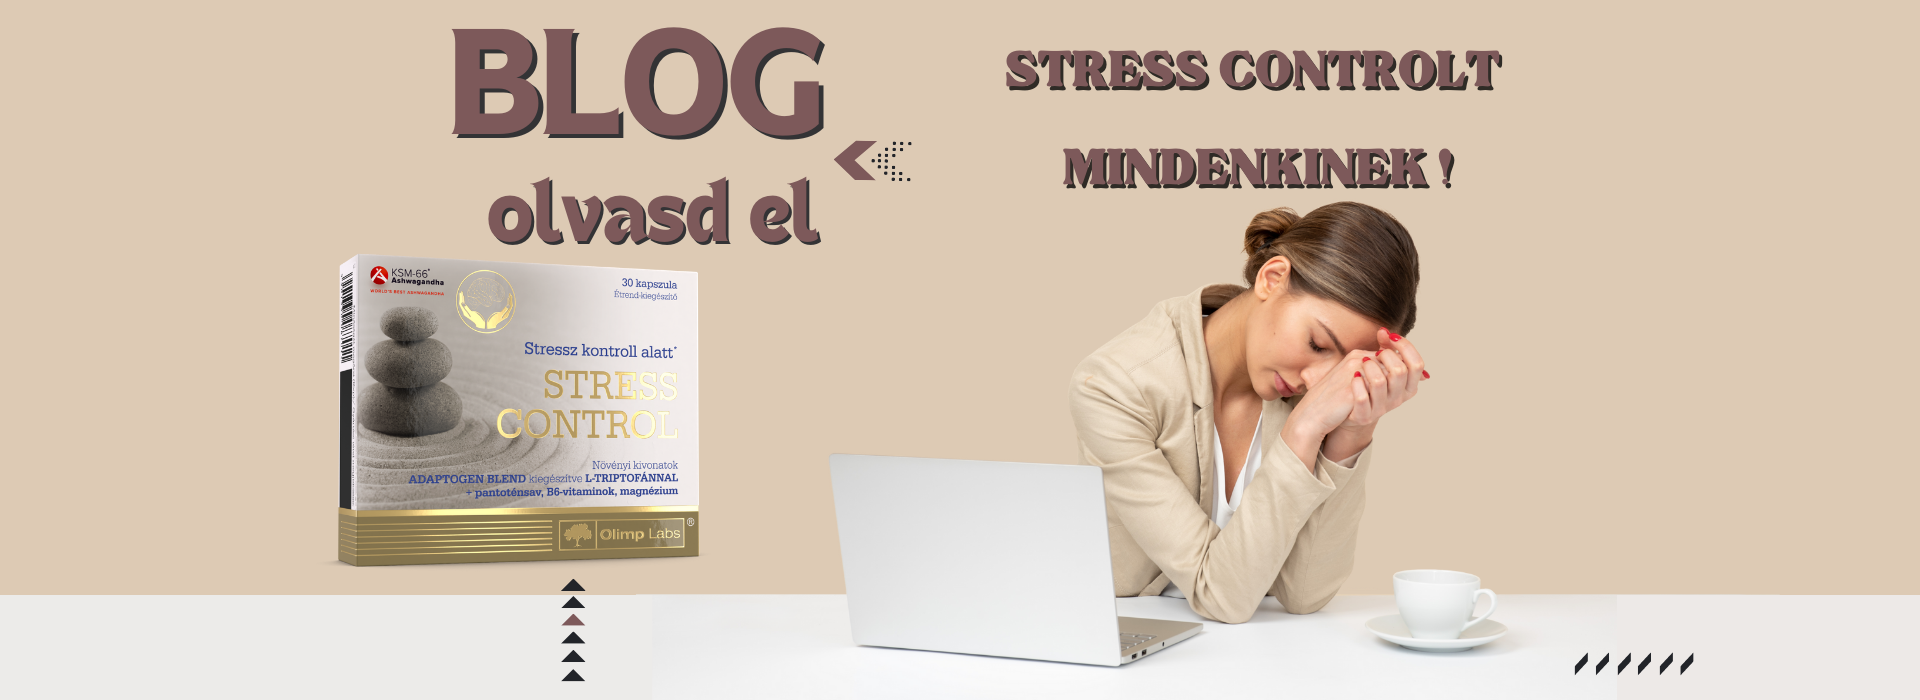 Blog stress